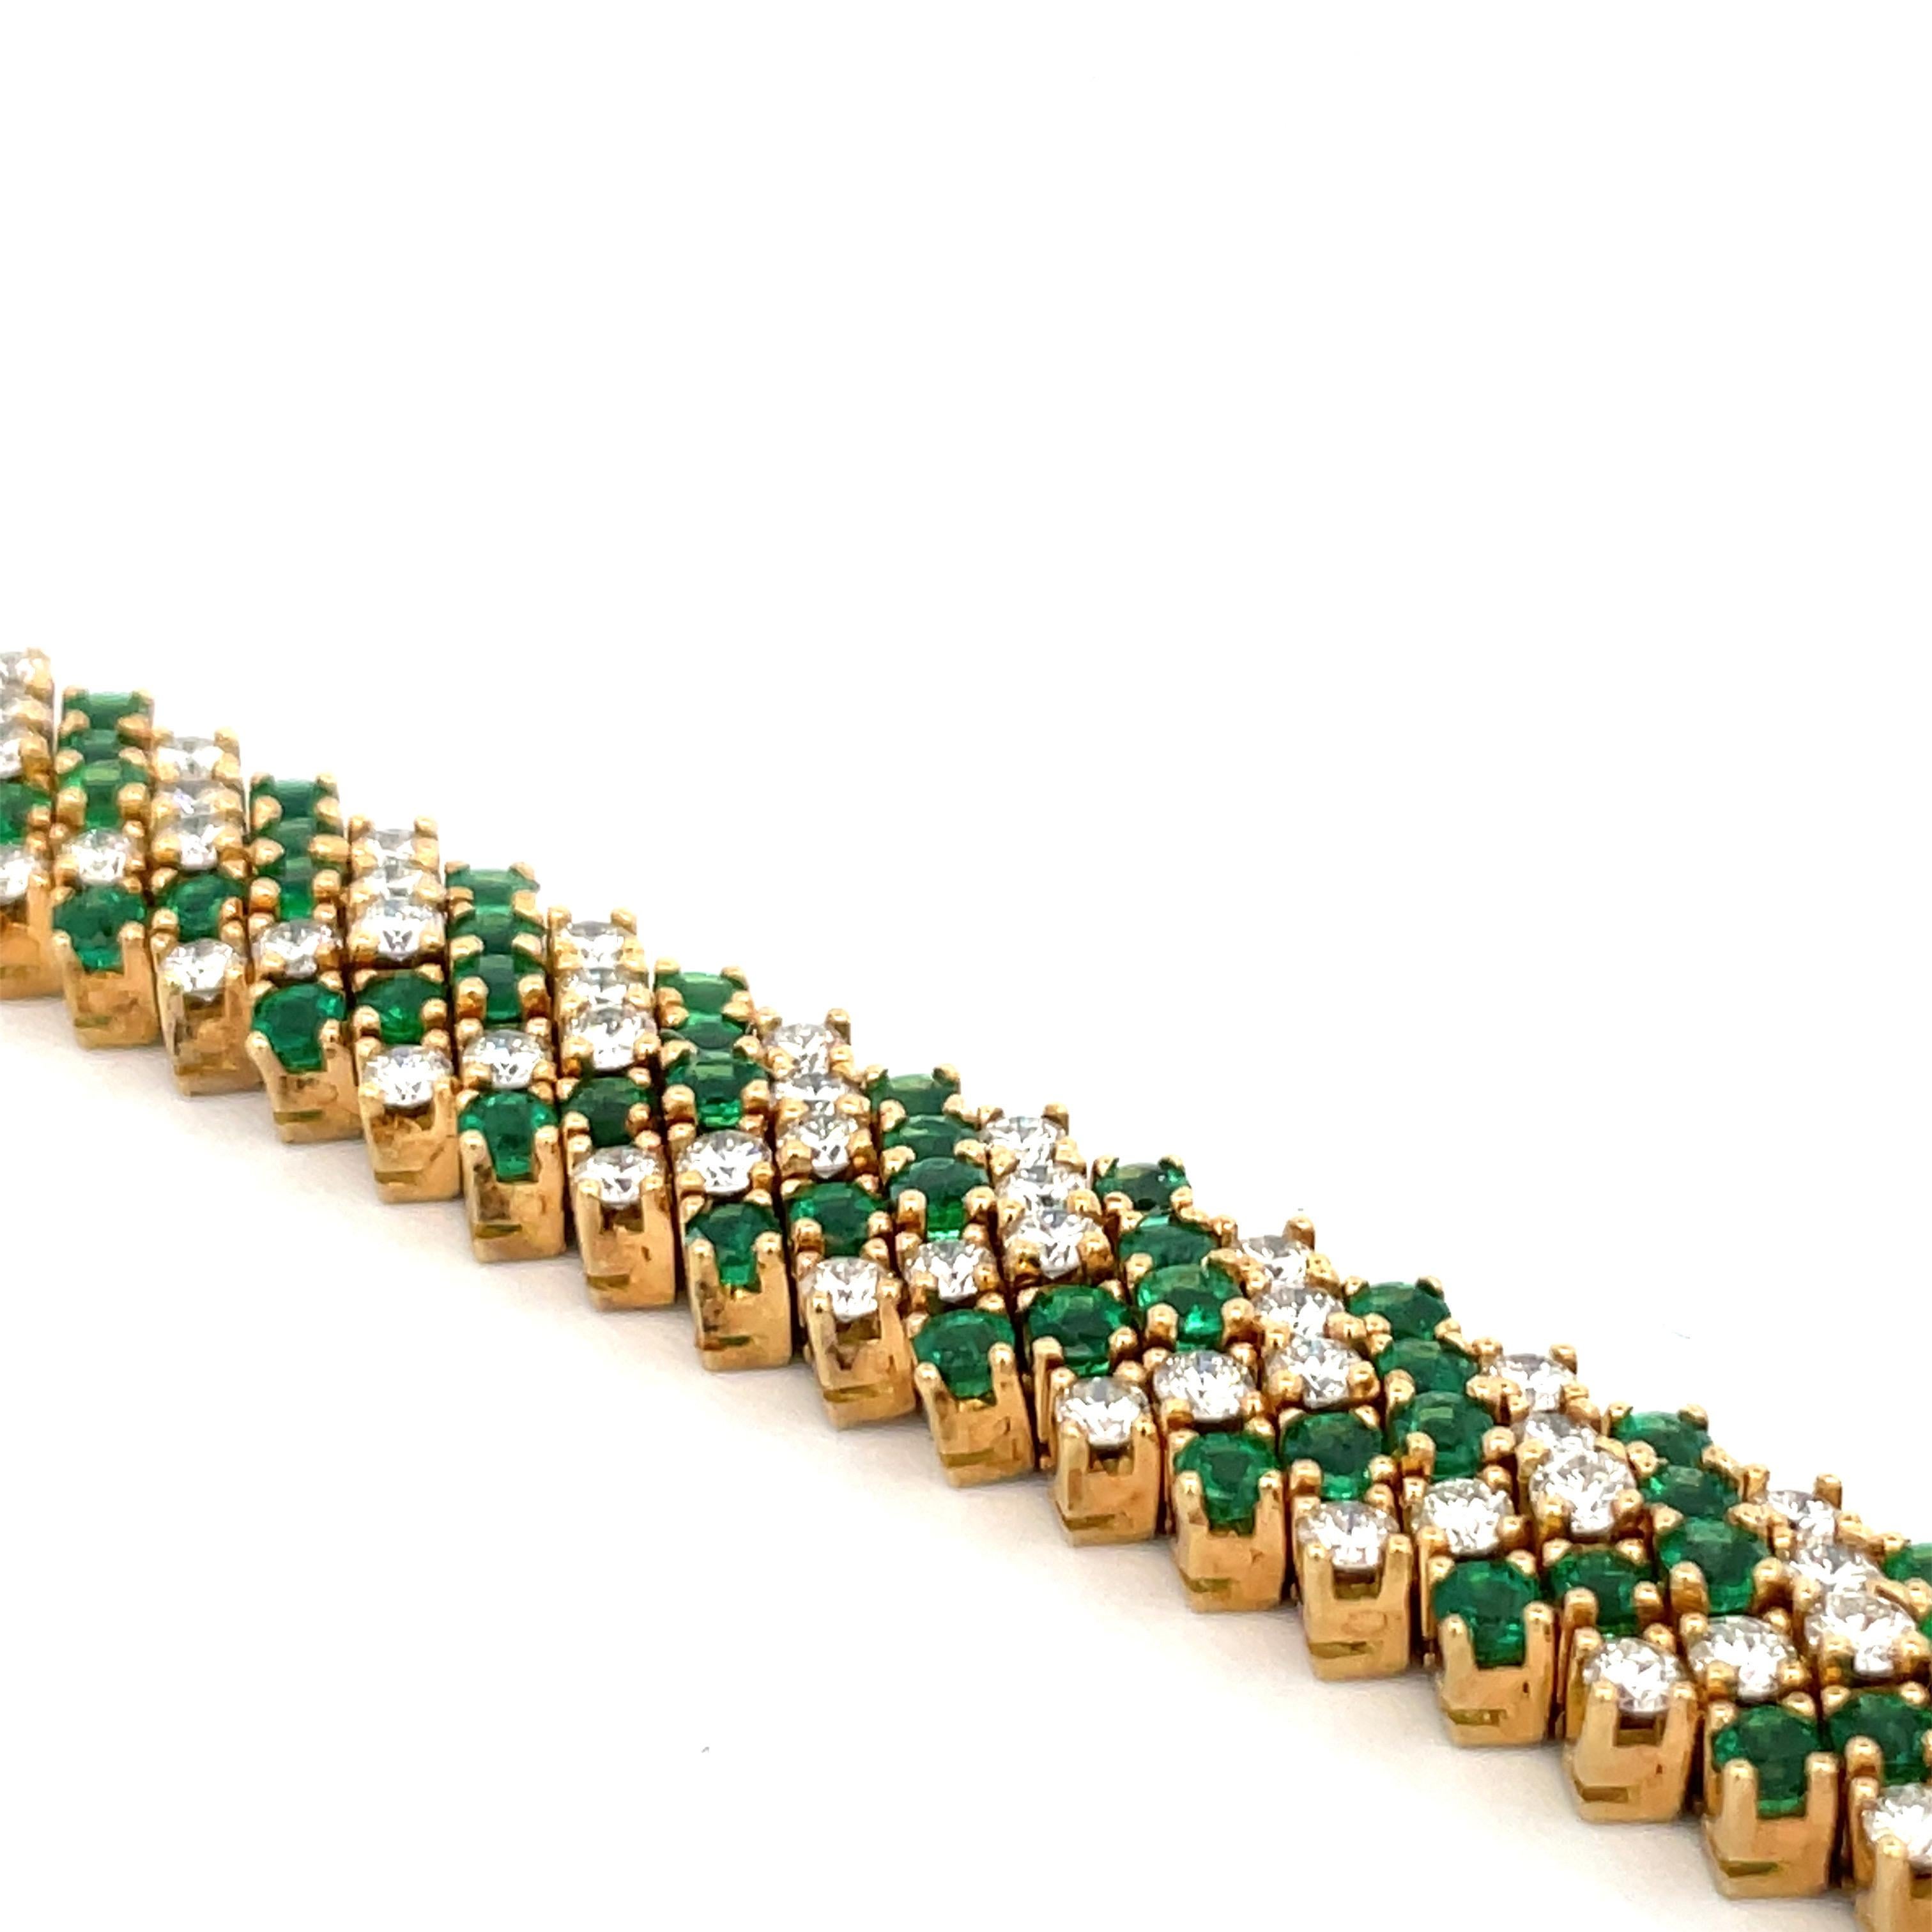 18 Karat yellow gold bracelet featuring diamond and green emeralds in a chevron motif design. 
Green Emerald - 6.50 Carats
Diamonds - 6.90 Carats